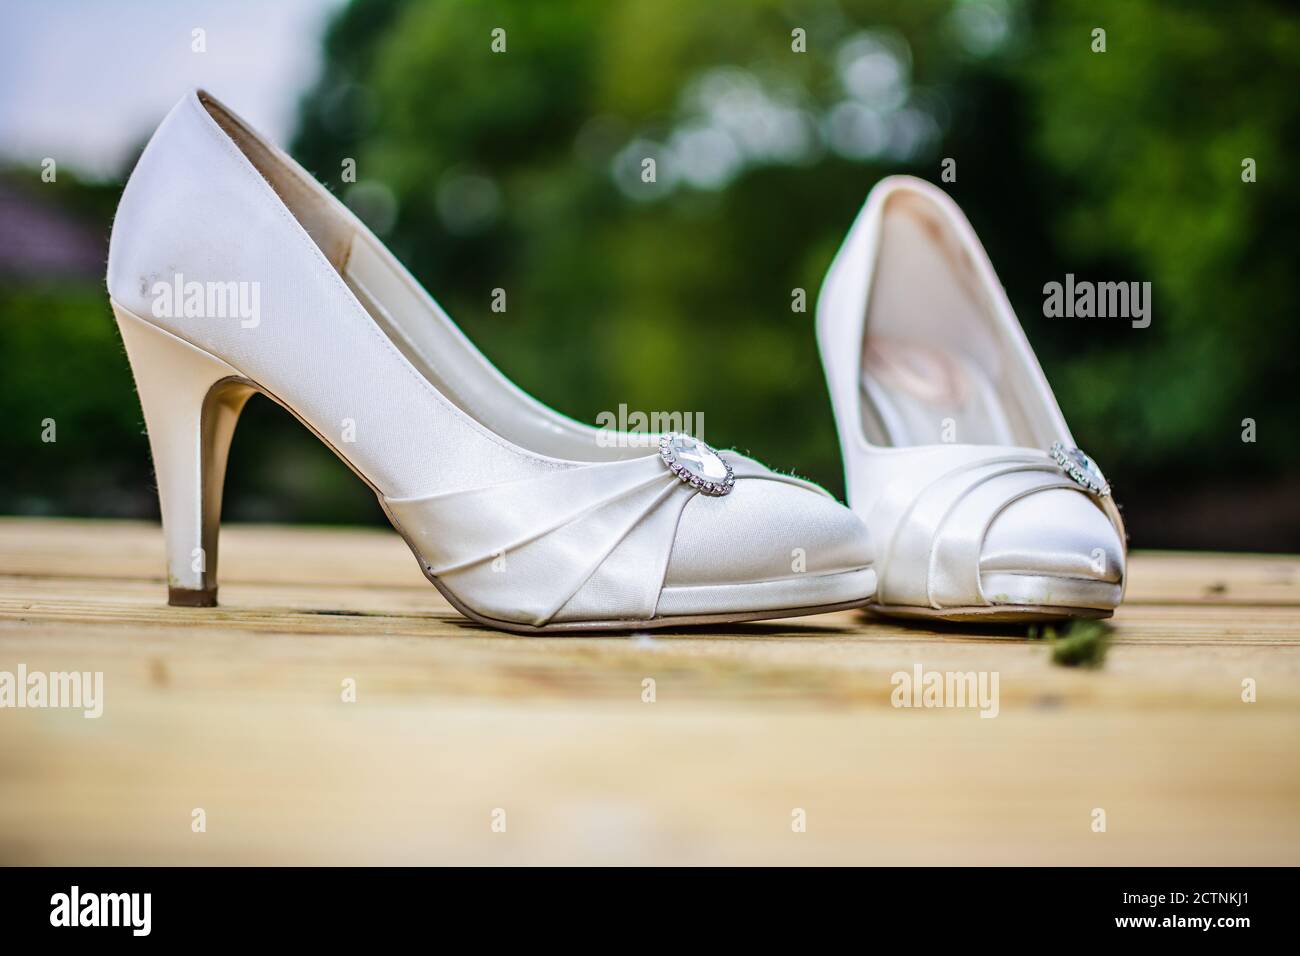 Beautiful wedding shoes Stock Photo - Alamy